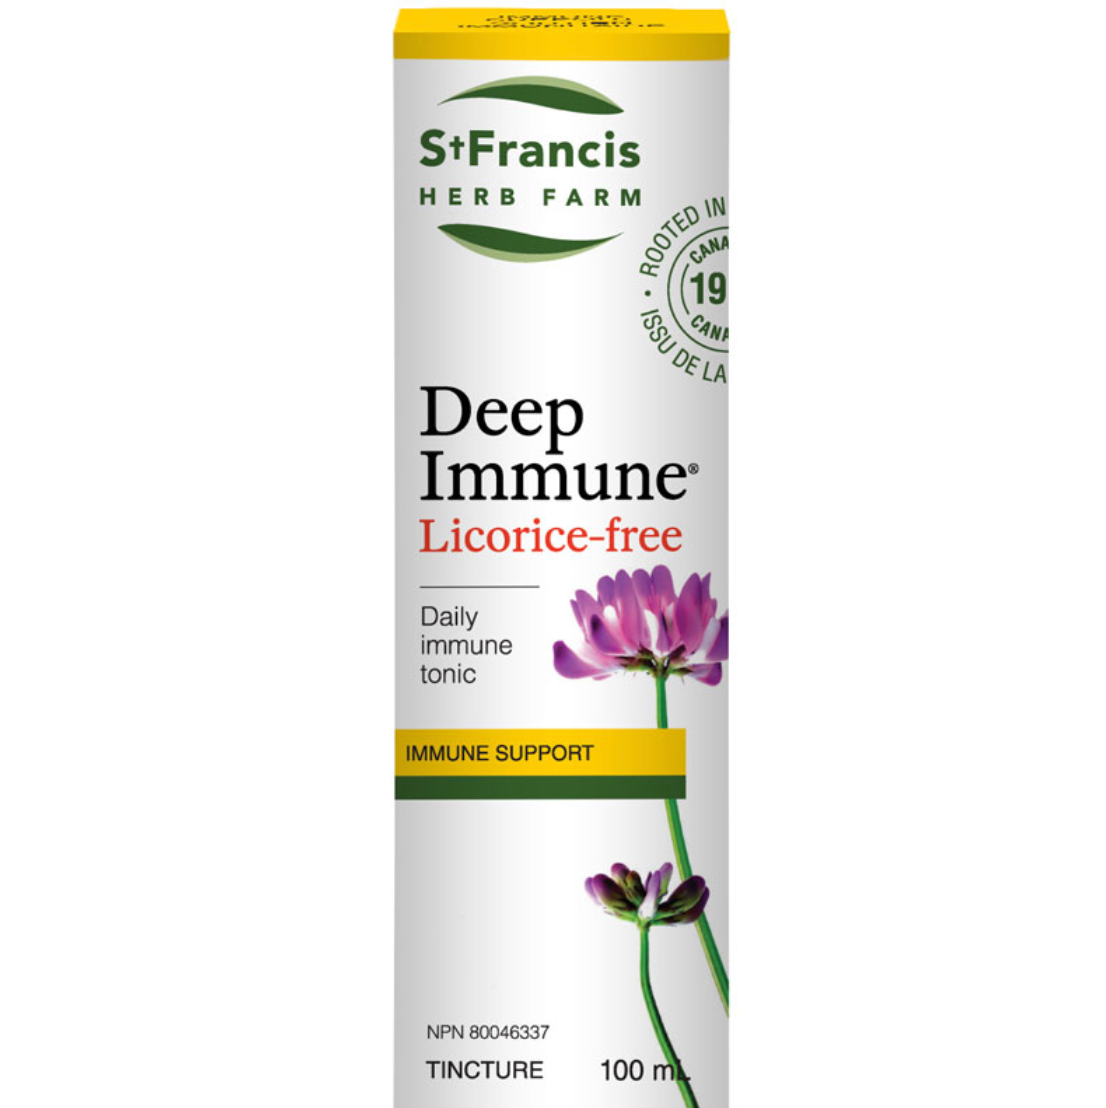 Deep Immune® Licorice-free 100mls